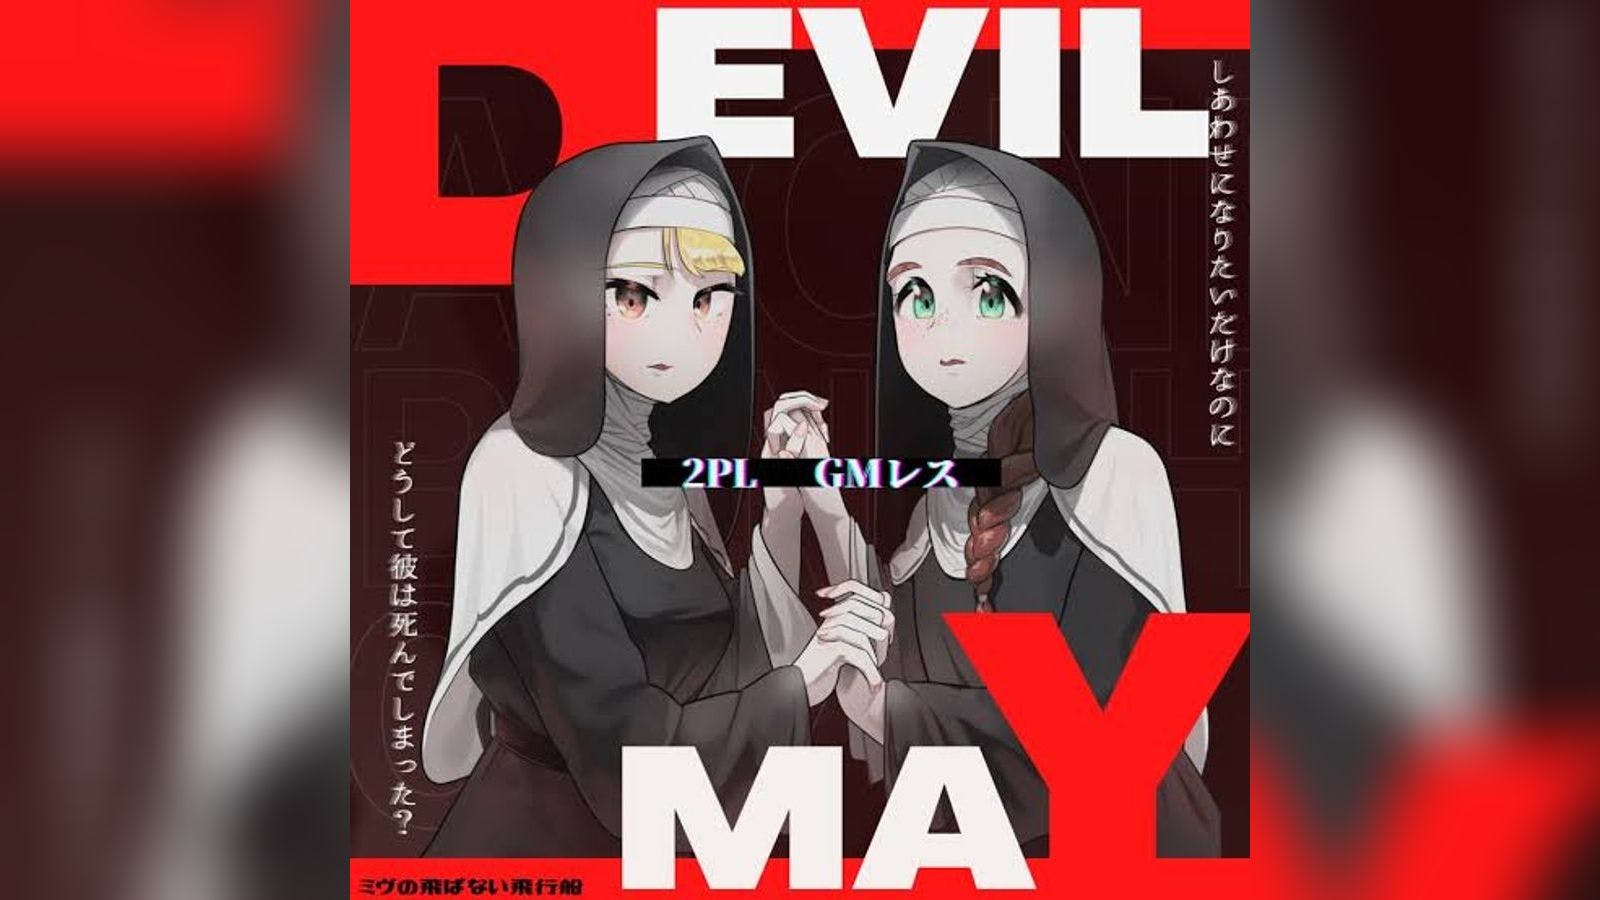 Devil May